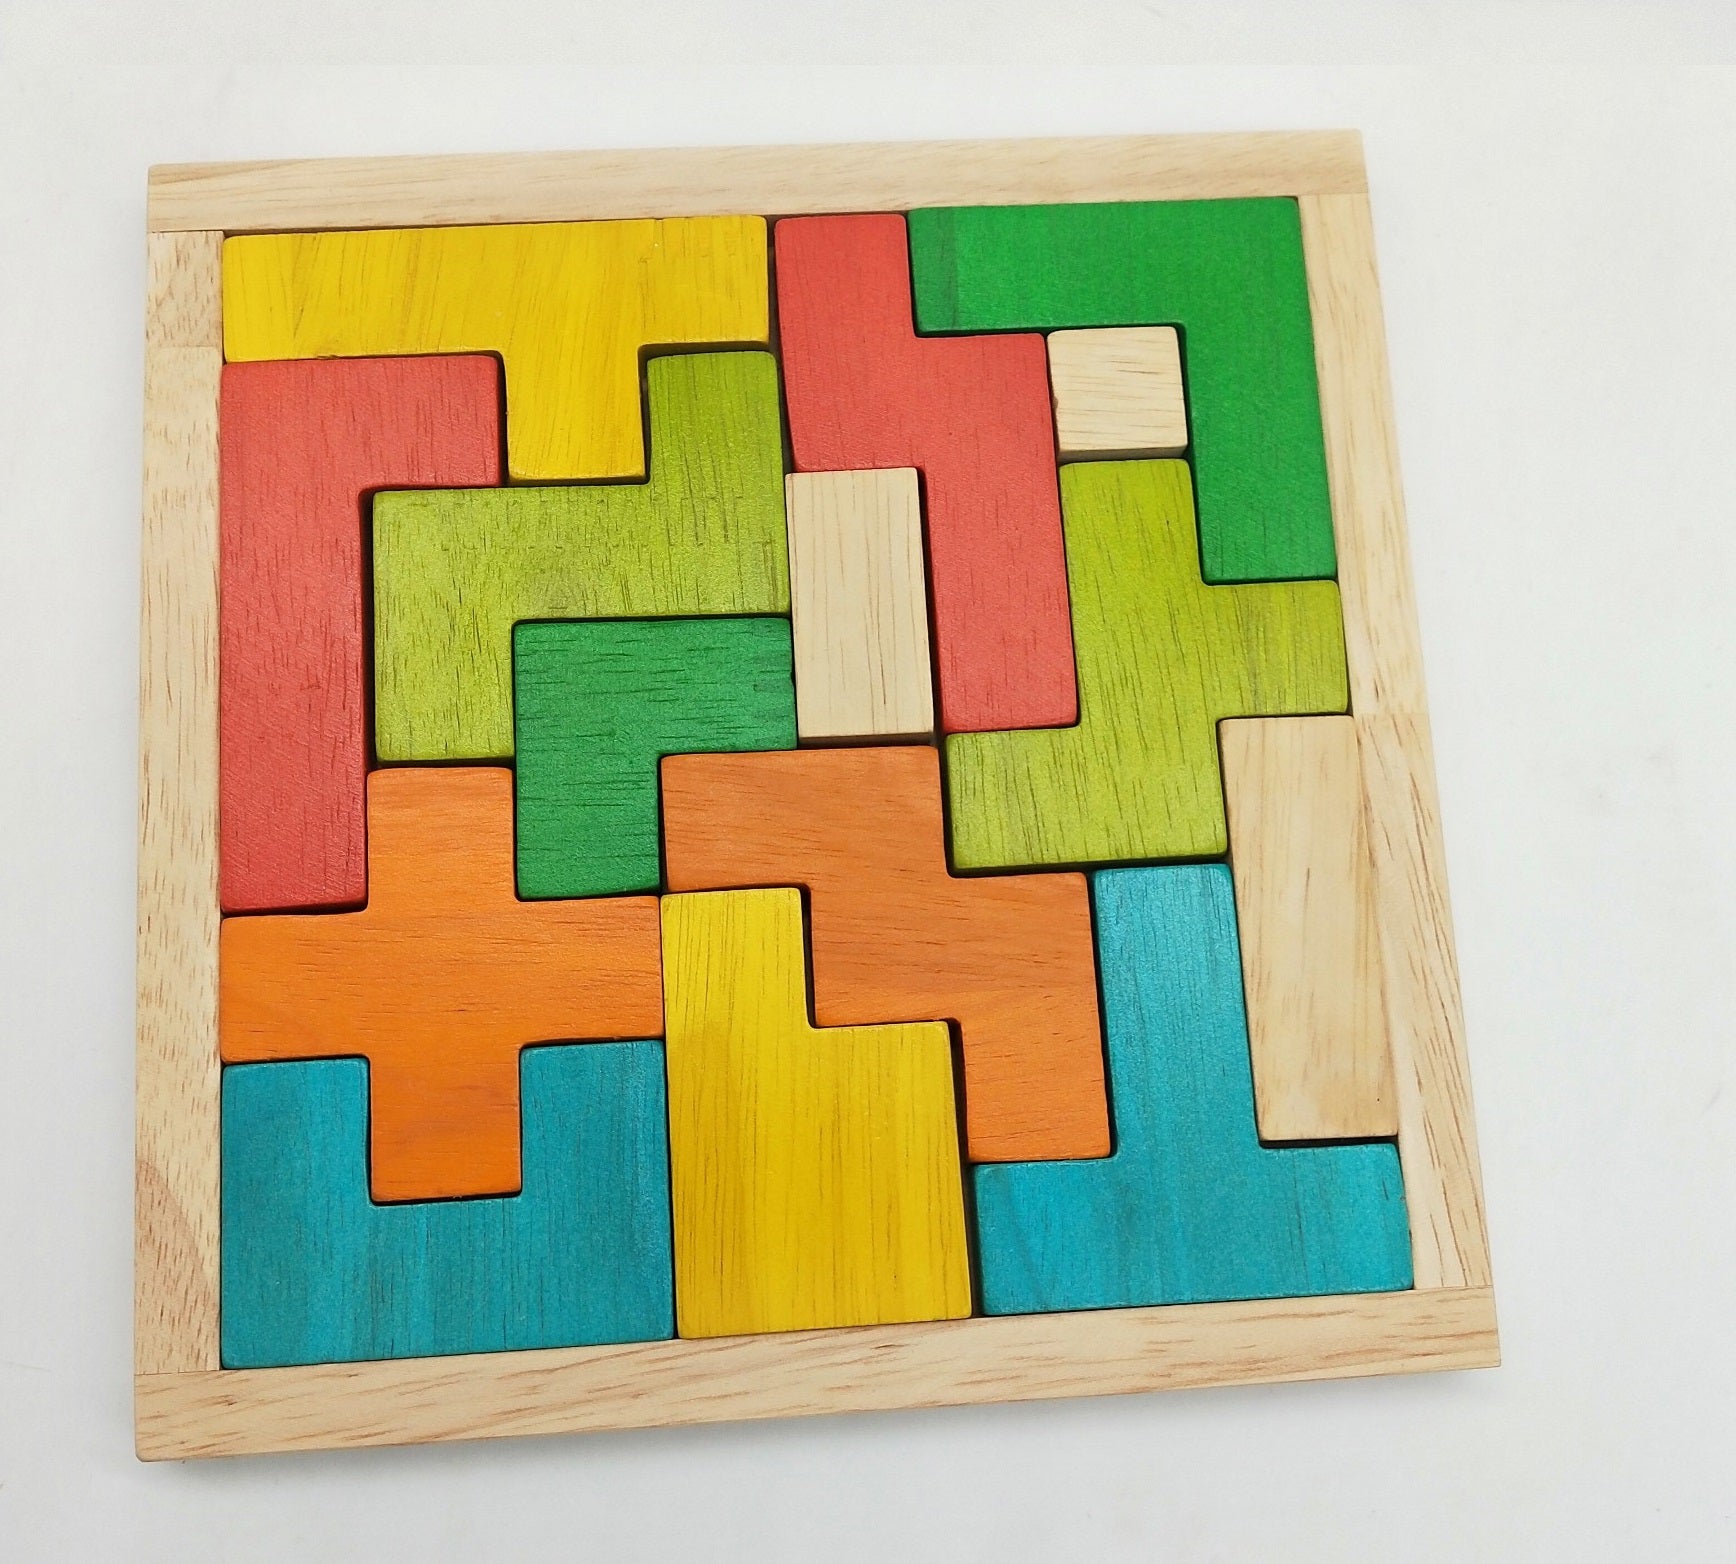 Block Games - Tetris style Block Puzzle Games 